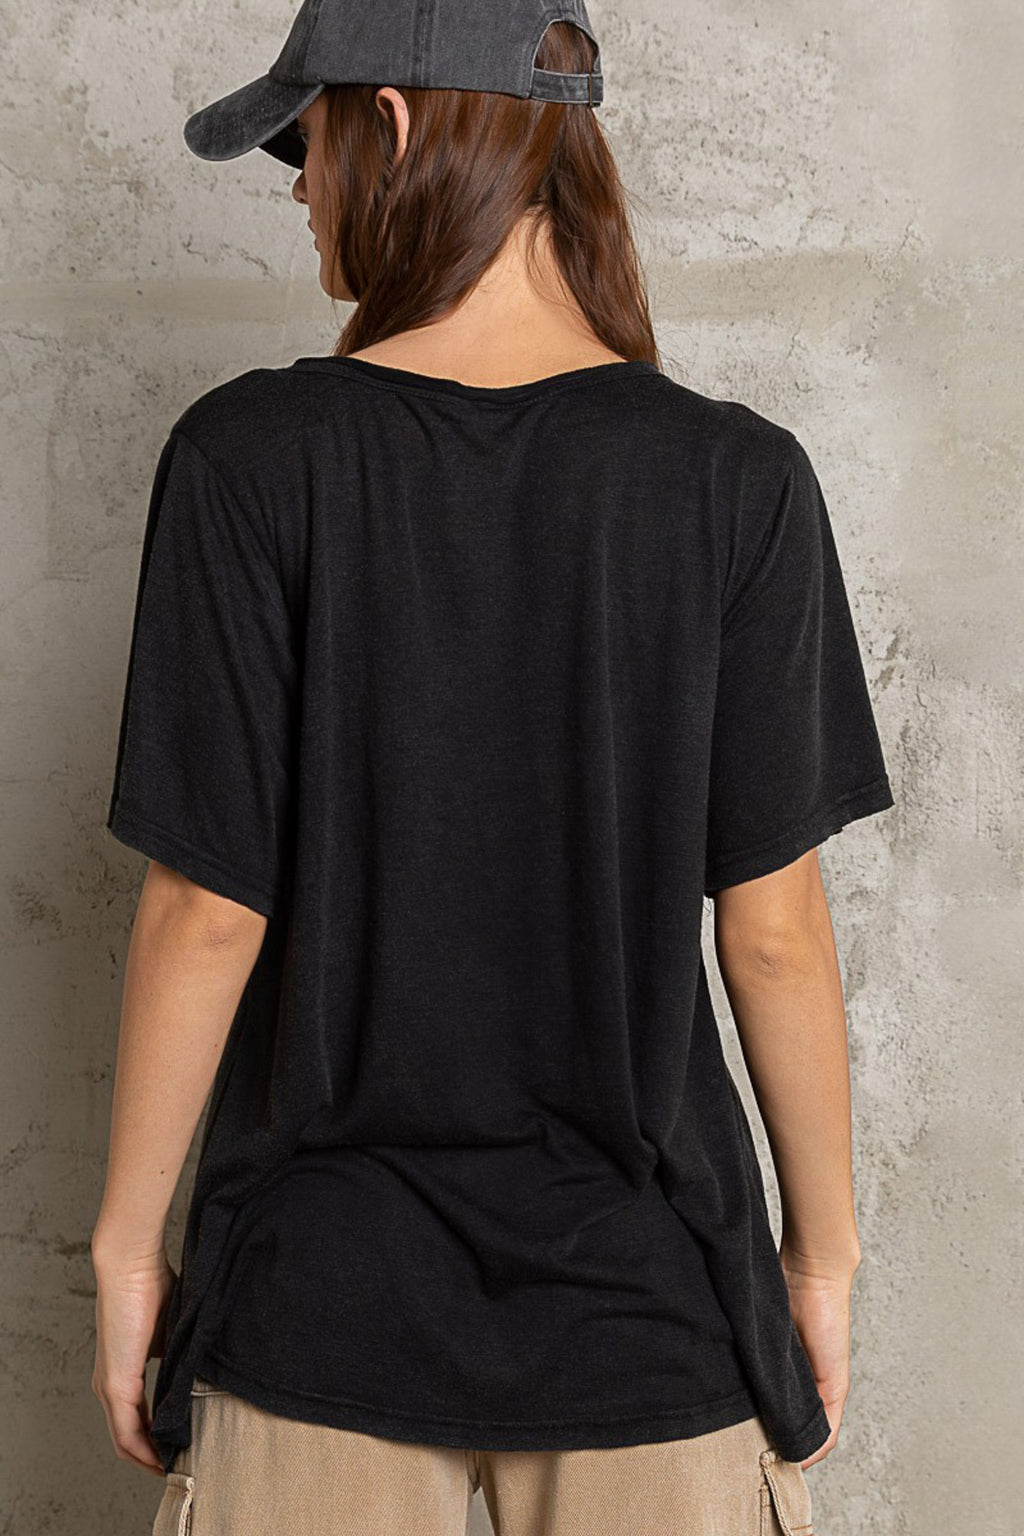 Delia T-Shirt in Black